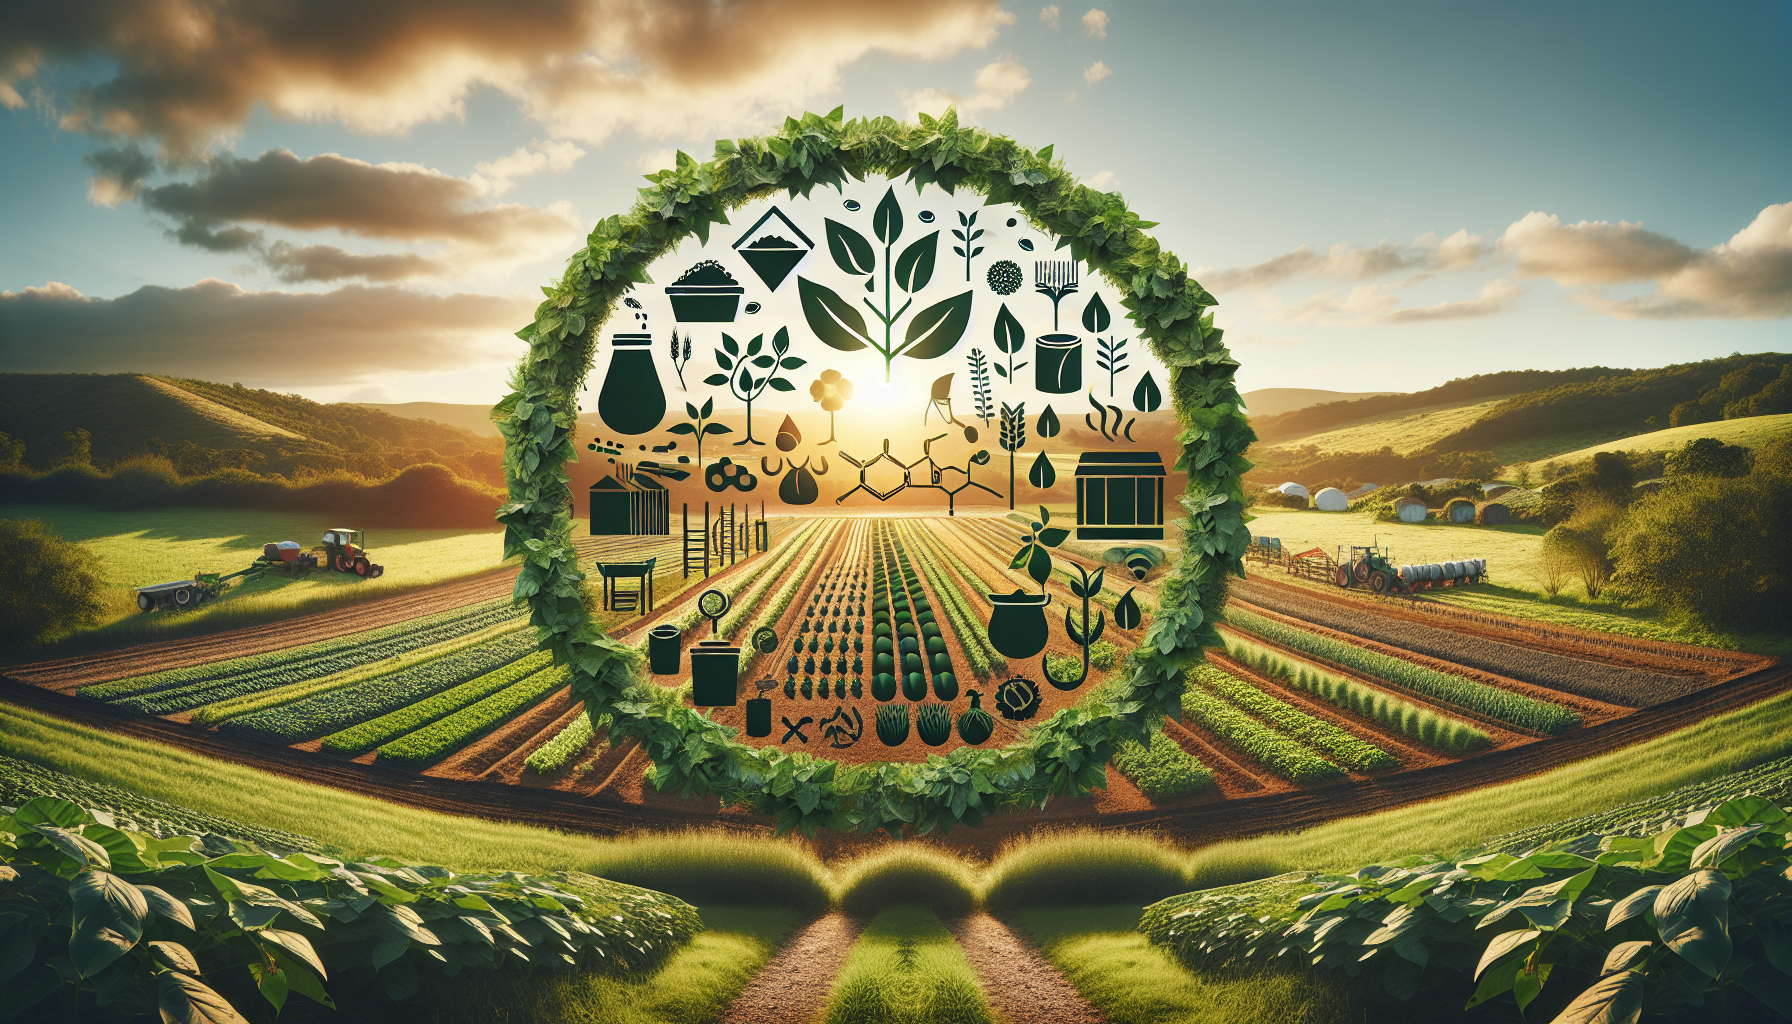 Most Popular Planting Materials For Organic Farming